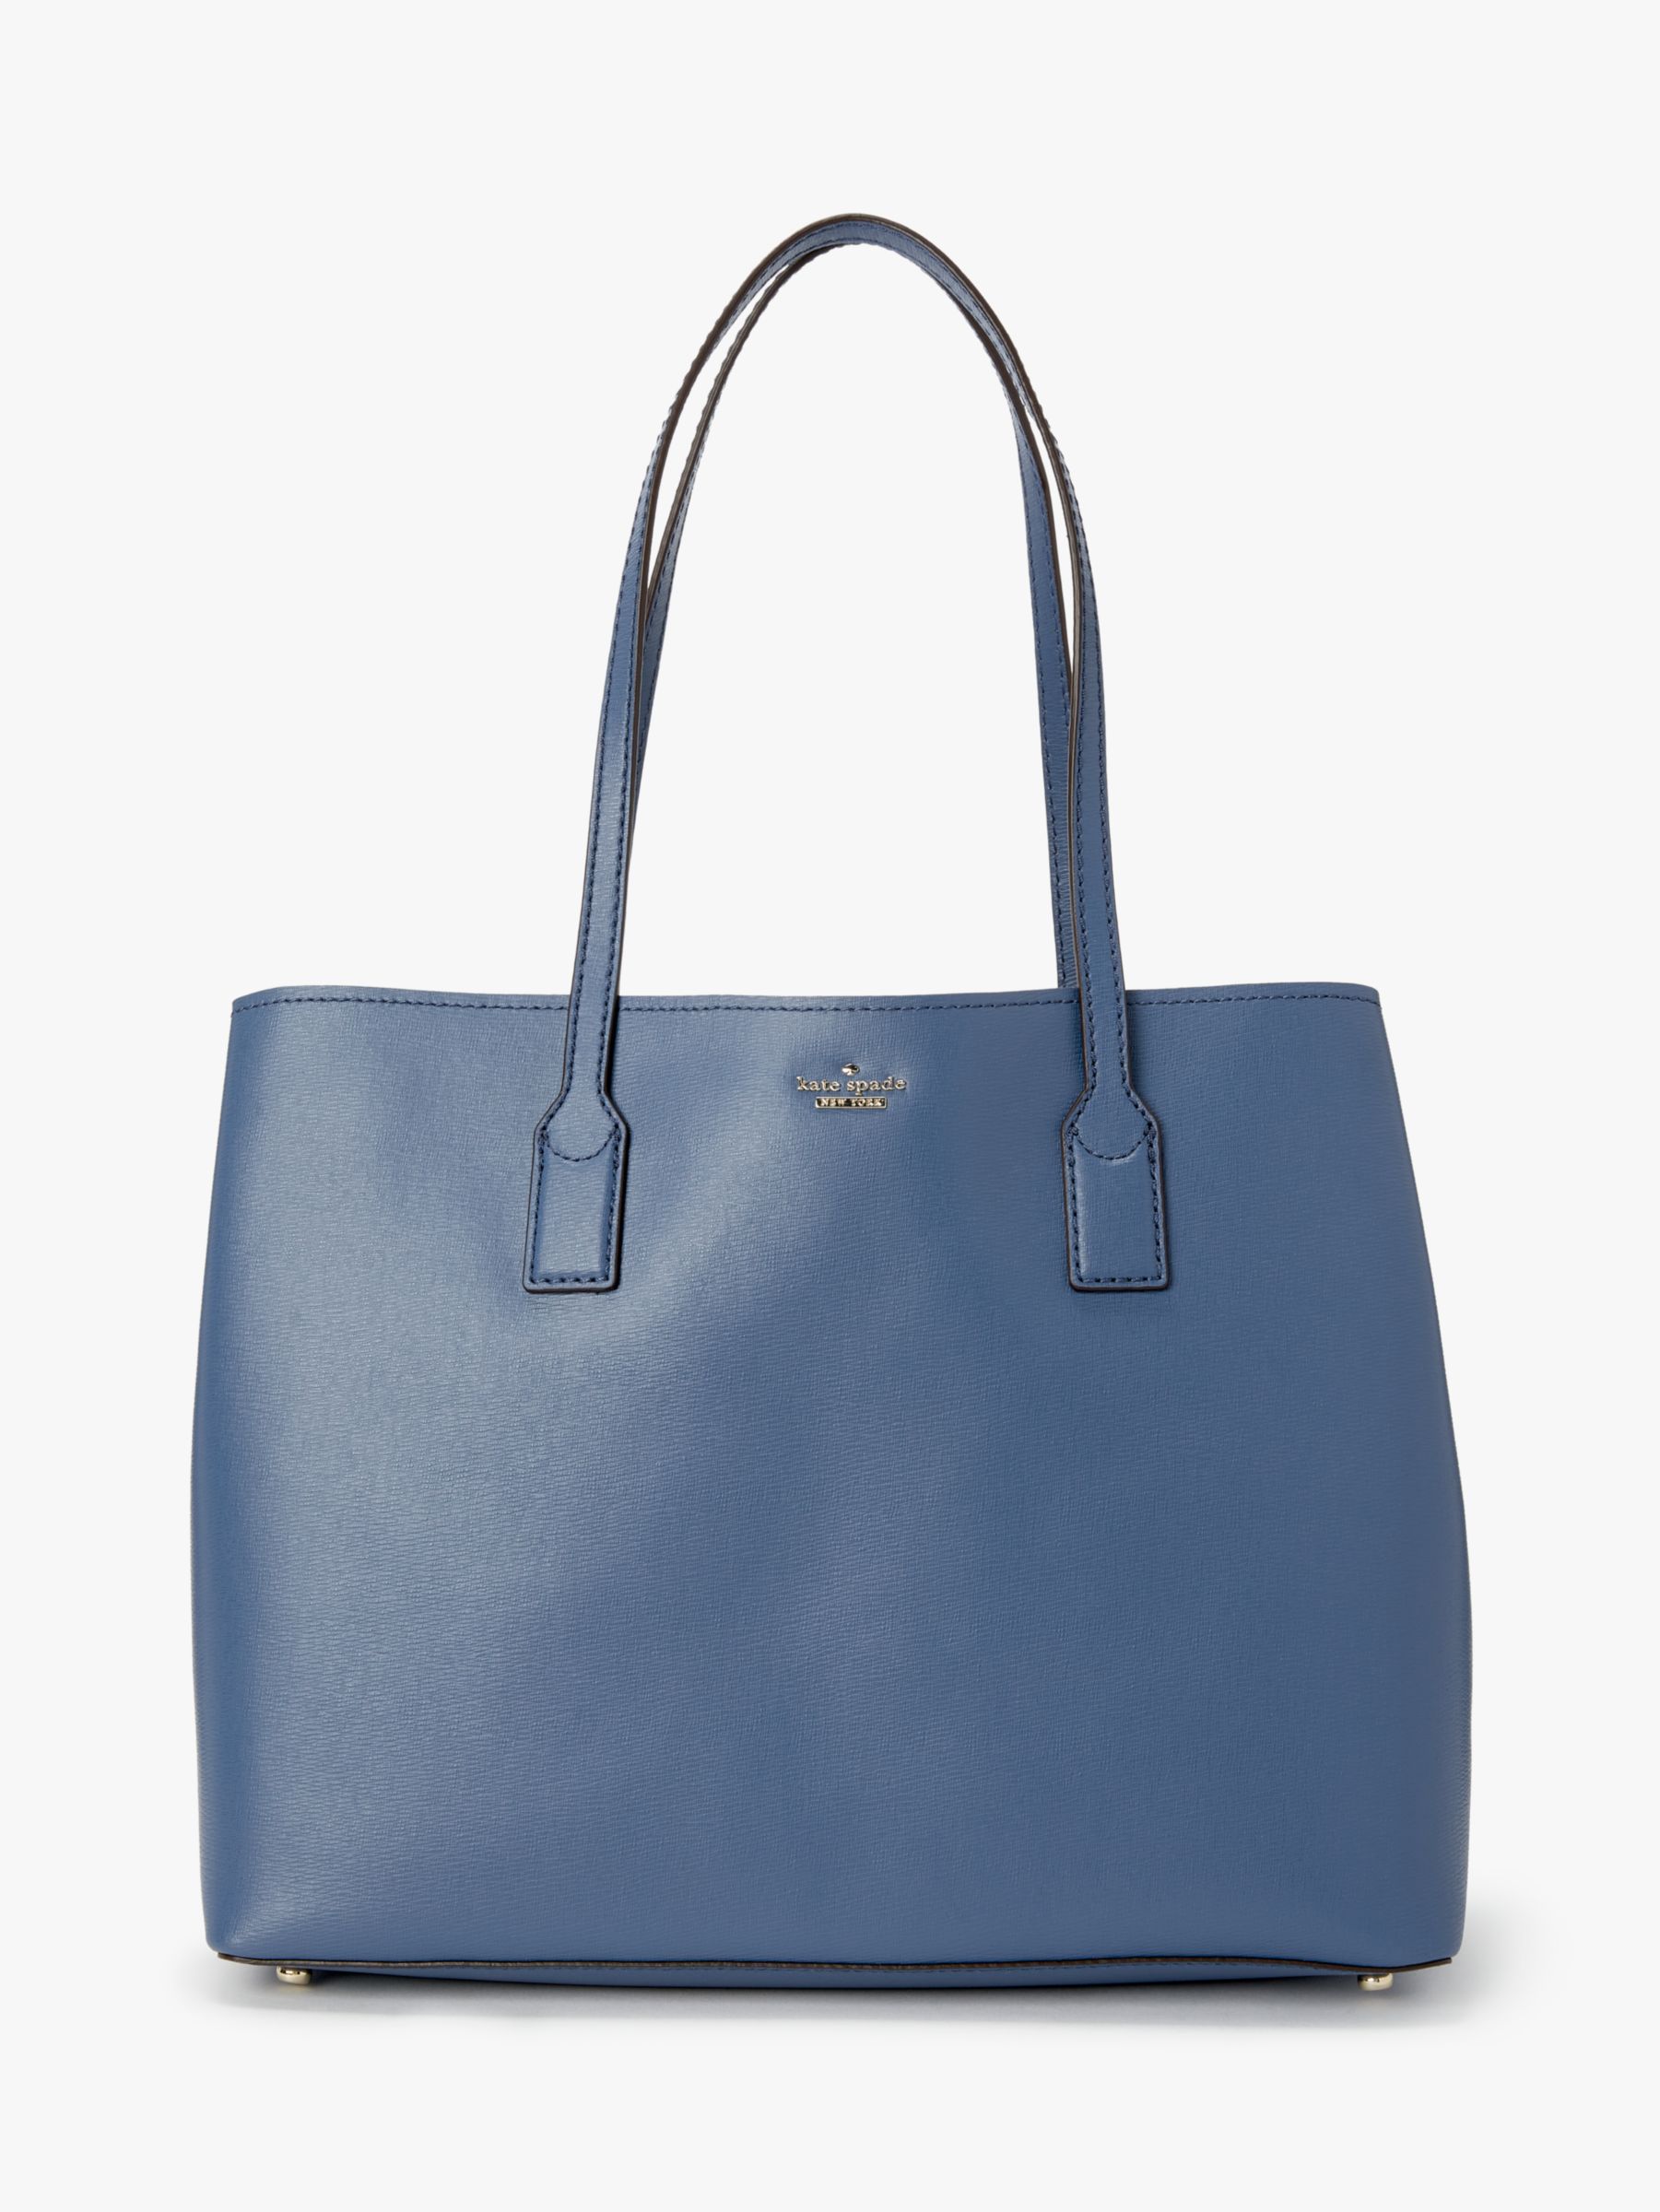 kate spade new york Hadley Road Dina Leather Handbag, Admiral Blue/Multi